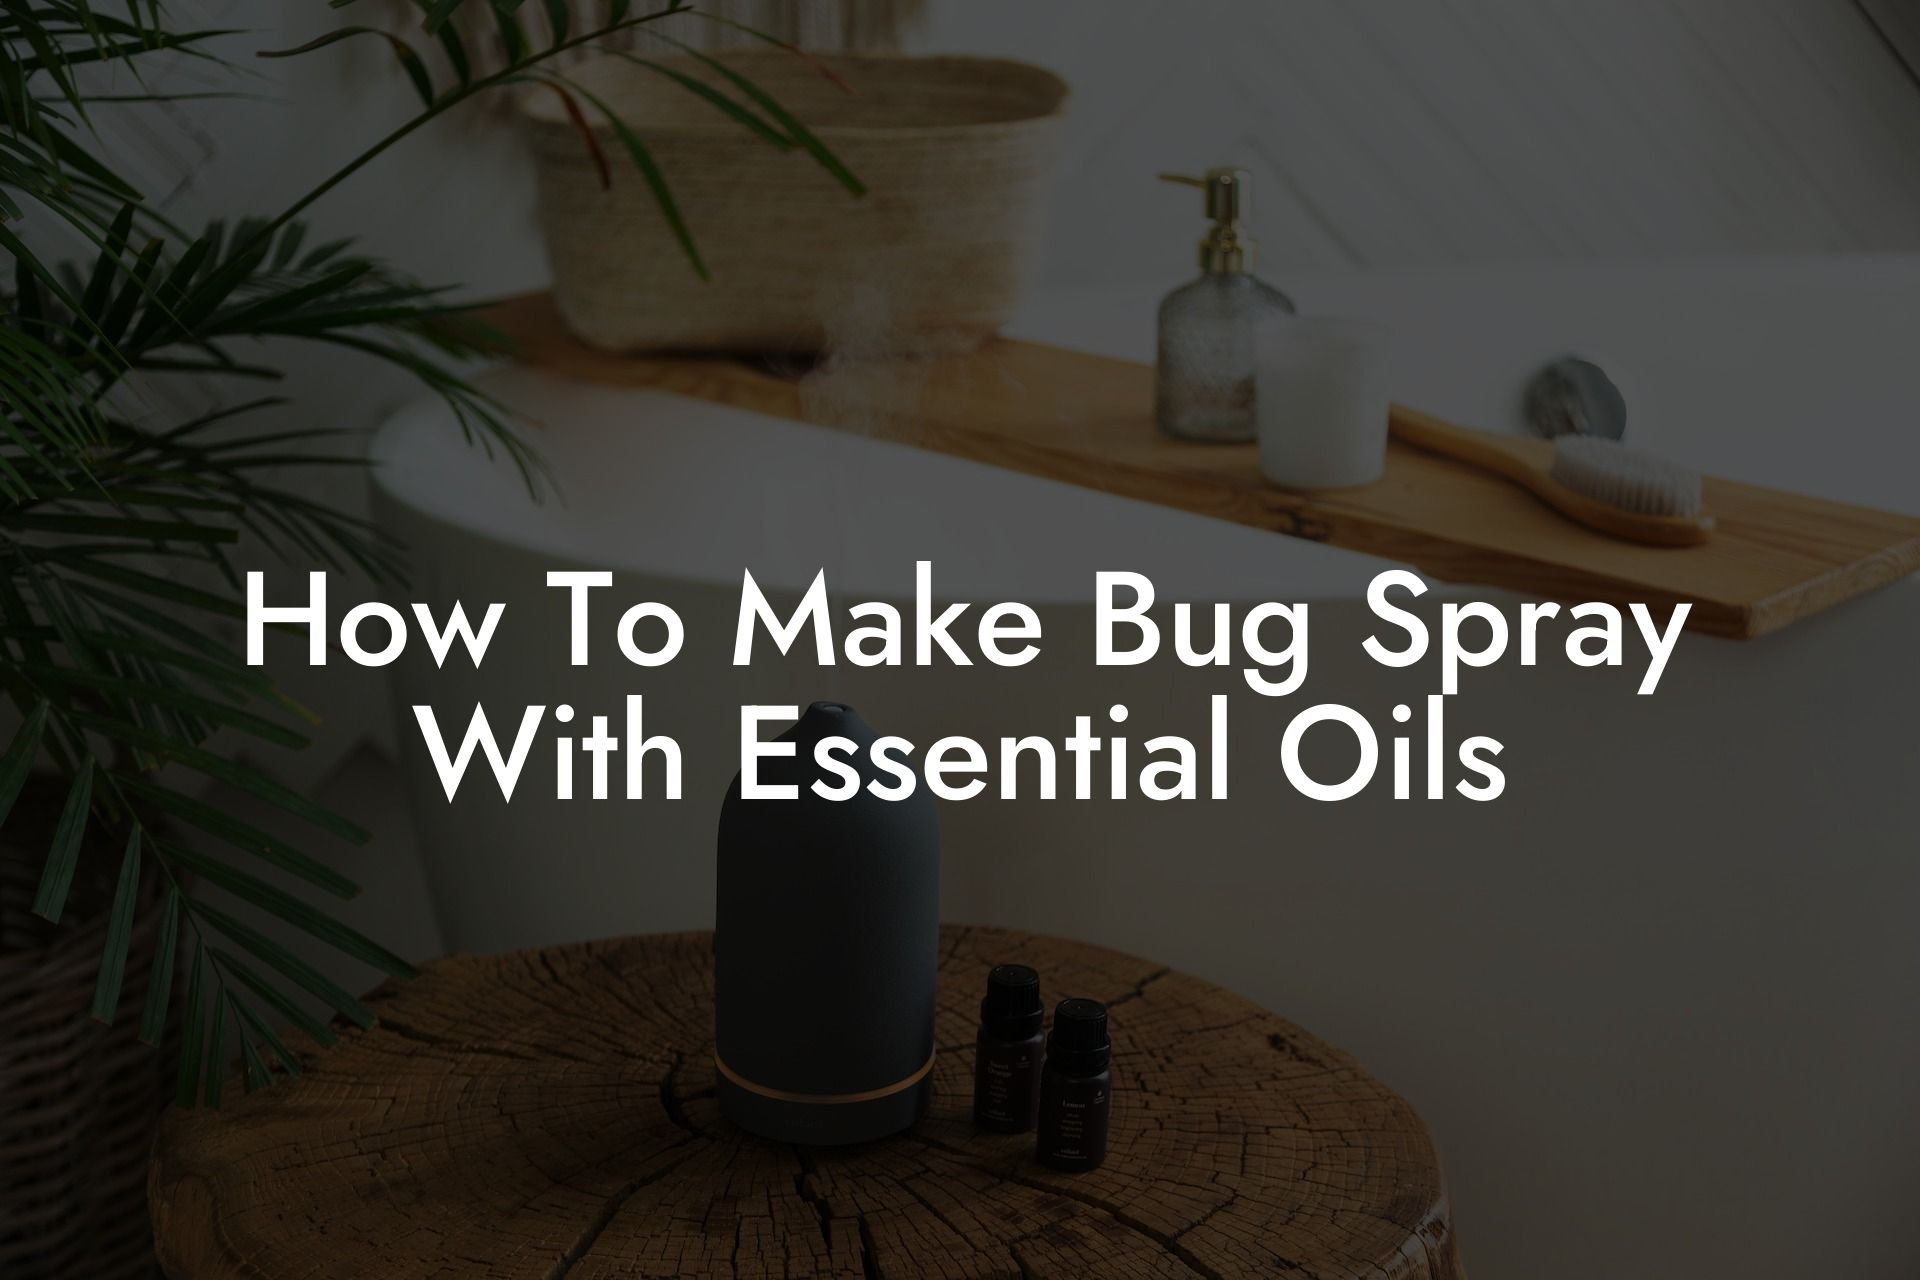 How To Make Bug Spray With Essential Oils